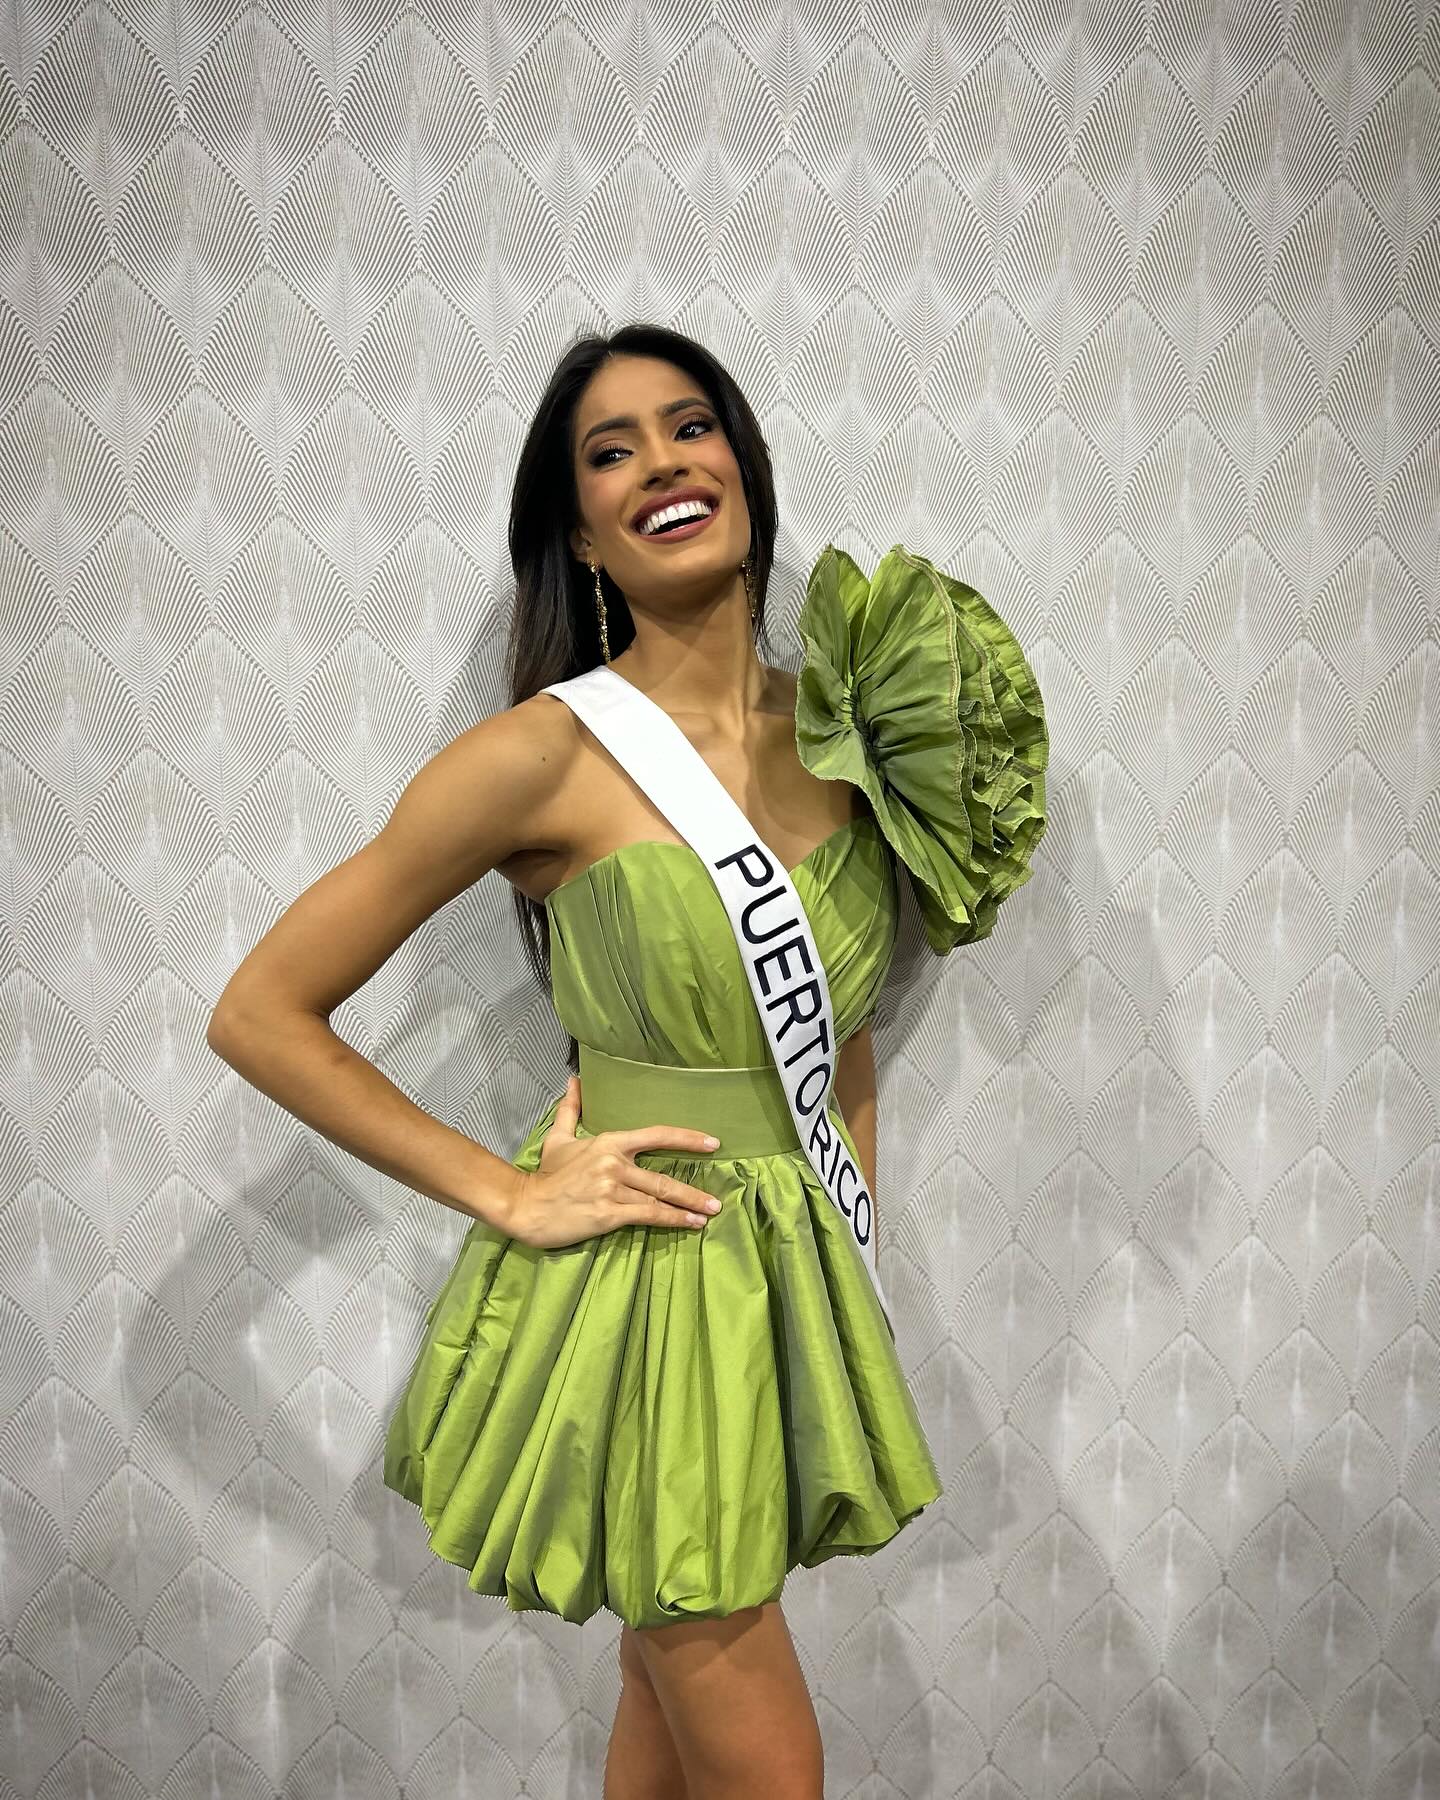 karla guilfu, top 5 de miss universe 2023/1st runner-up de miss supranational 2021. - Página 23 43185510